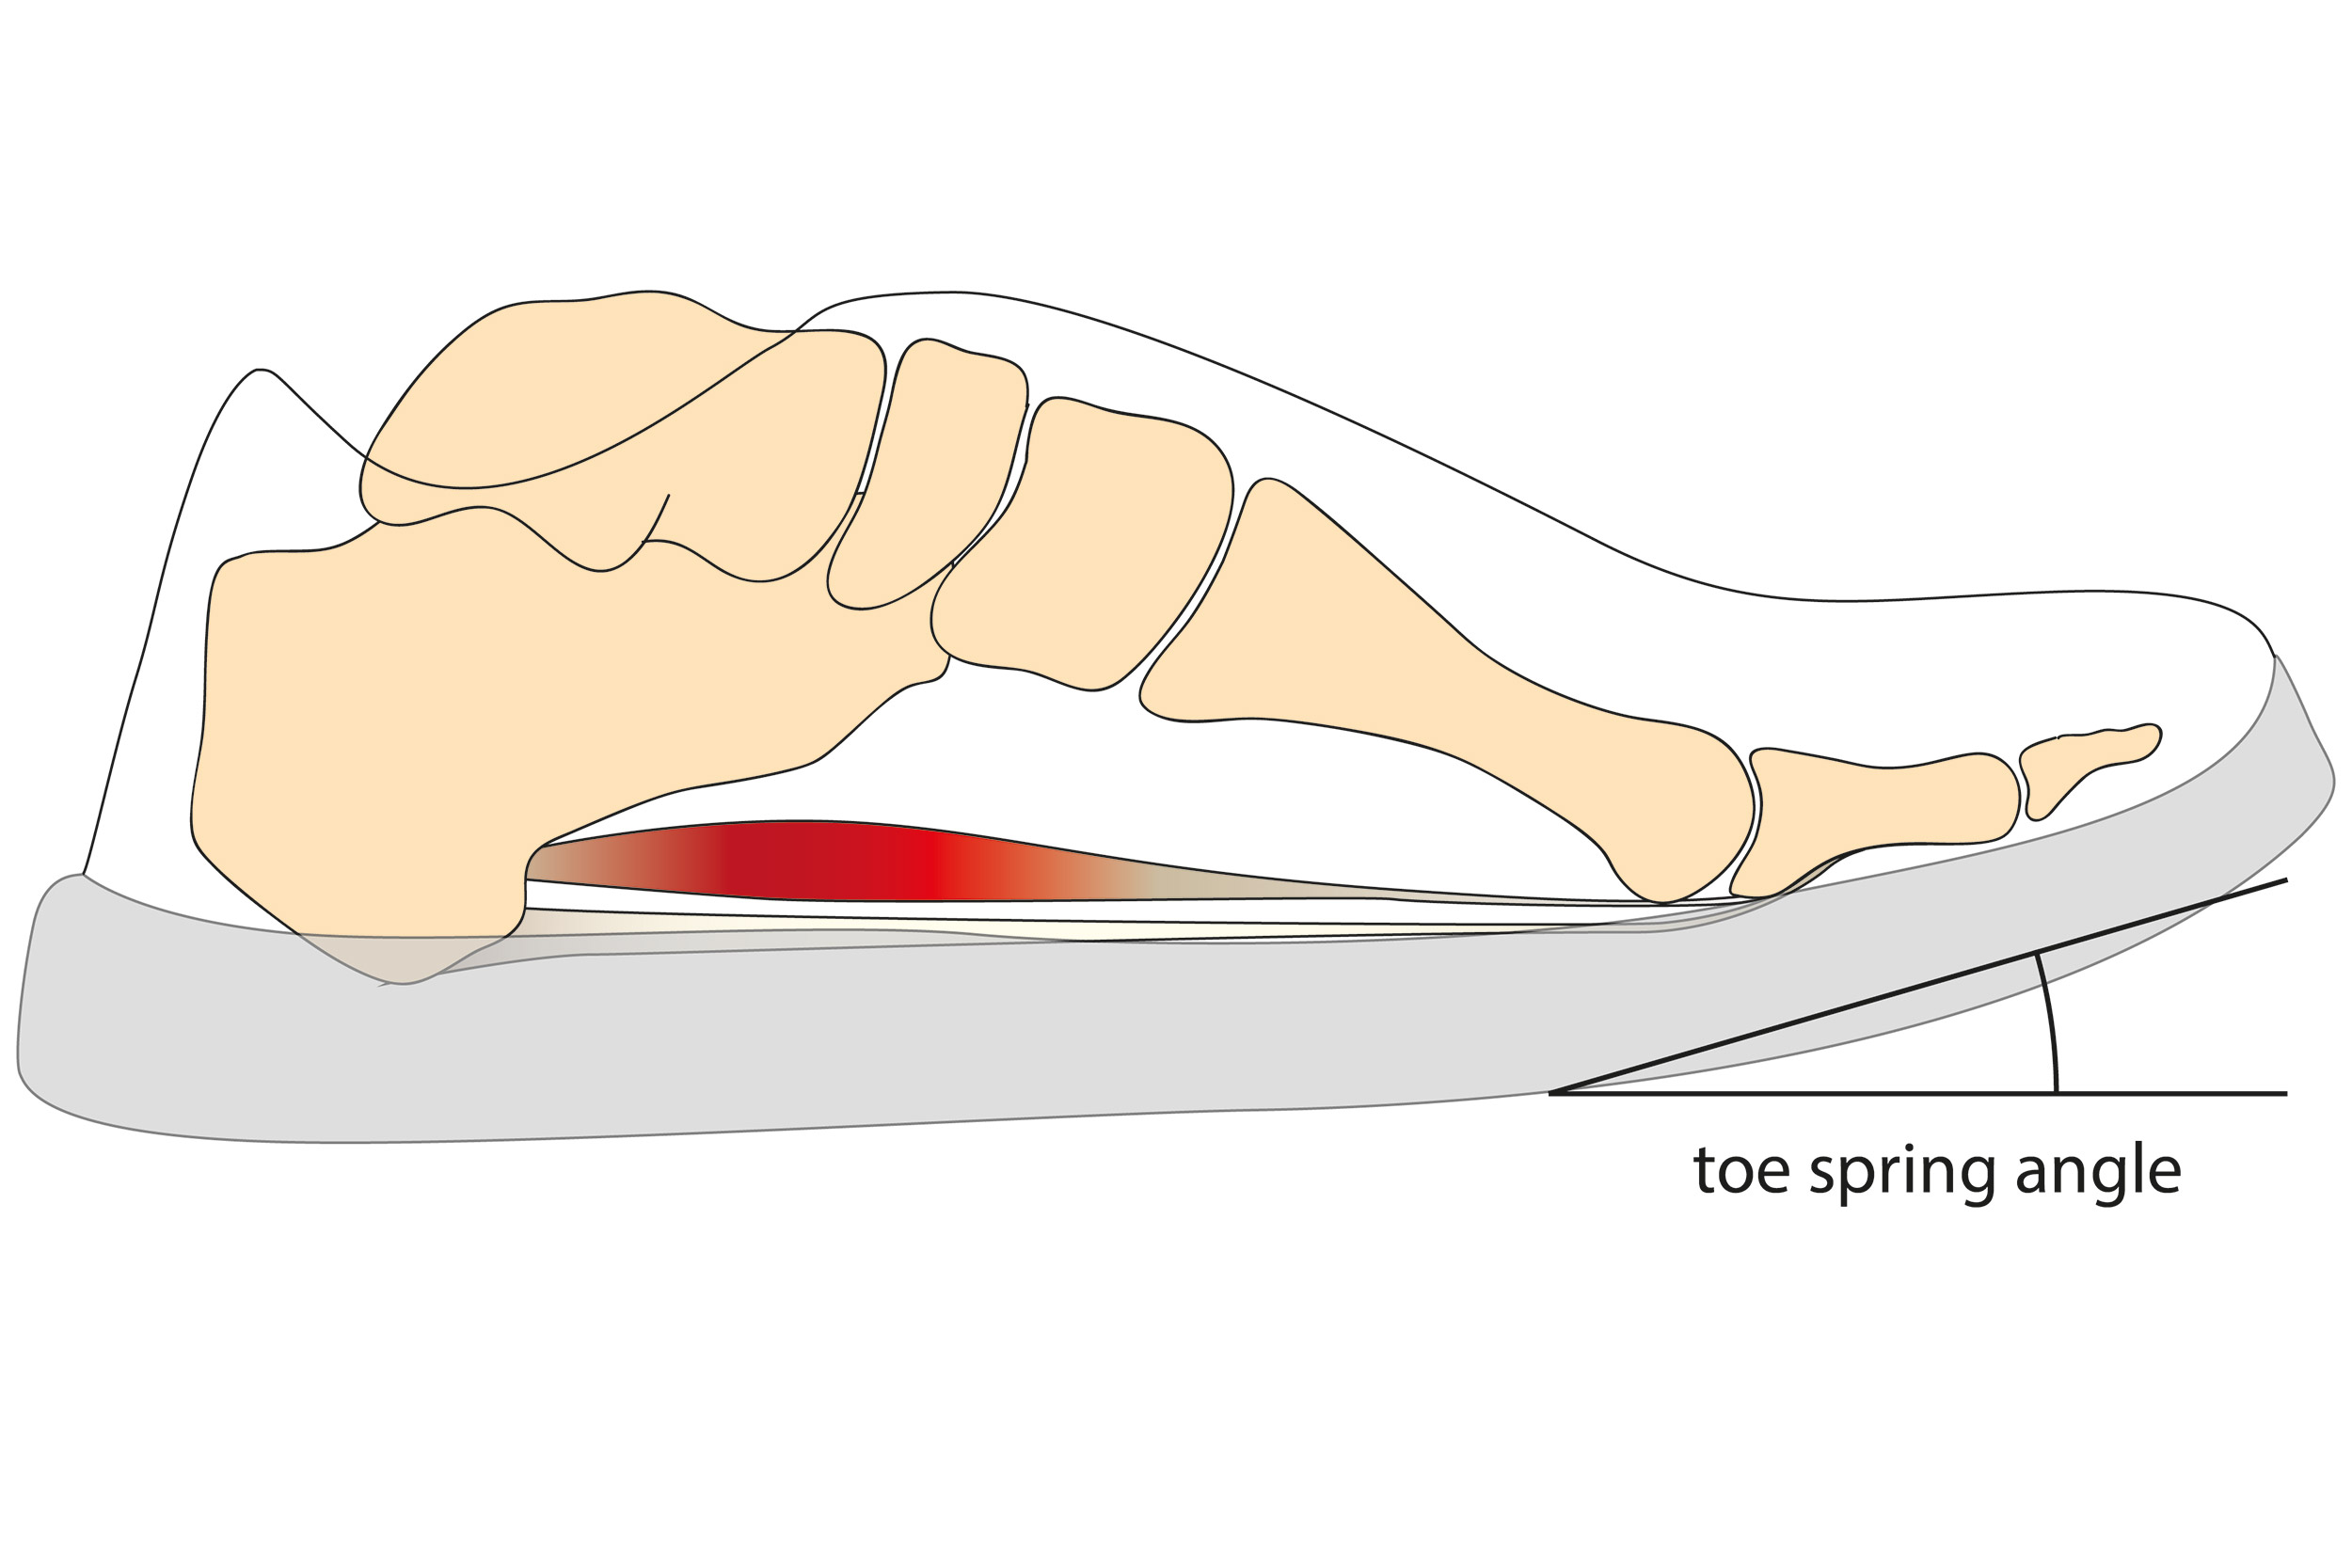 Illustration of a toe